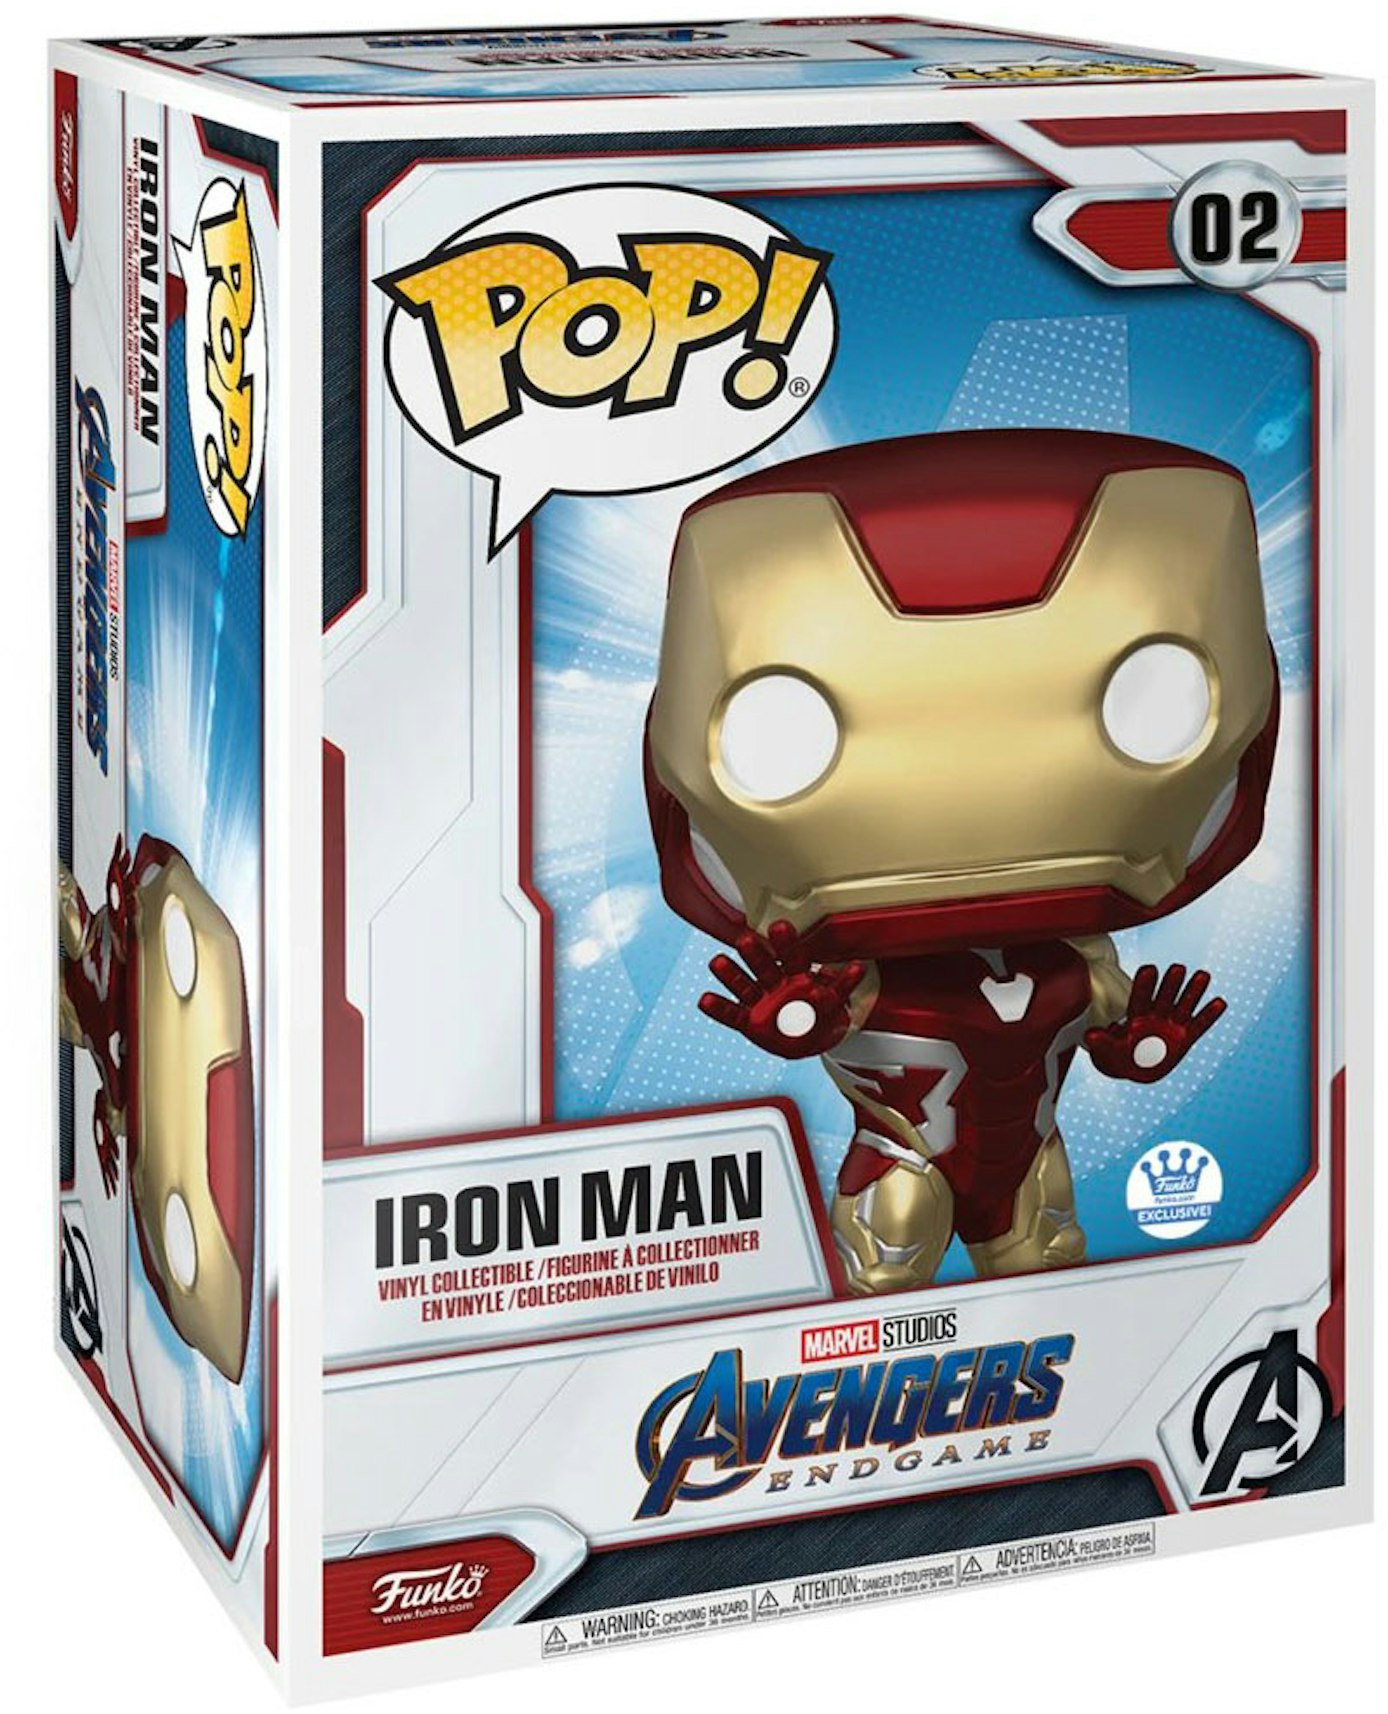 Afrika De er violinist Funko Pop! Marvel Avengers End Game Iron Man 18 Inch Funko Shop Exclusive  Figure #02 - FW21 - US